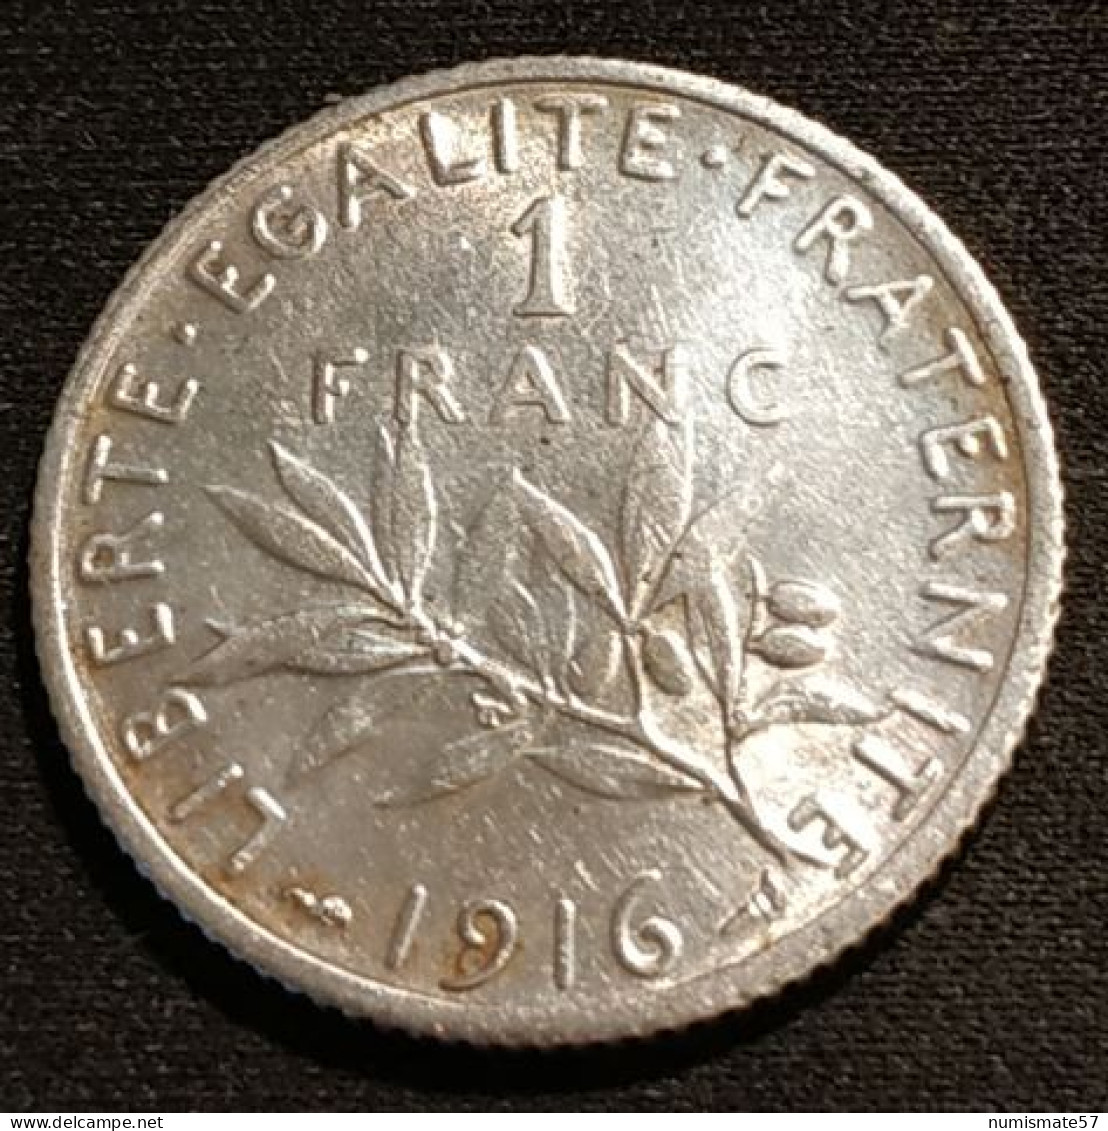 FRANCE - 1 FRANC 1916 - Semeuse - Argent - Silver - Gad 467 - KM 844 - 1 Franc